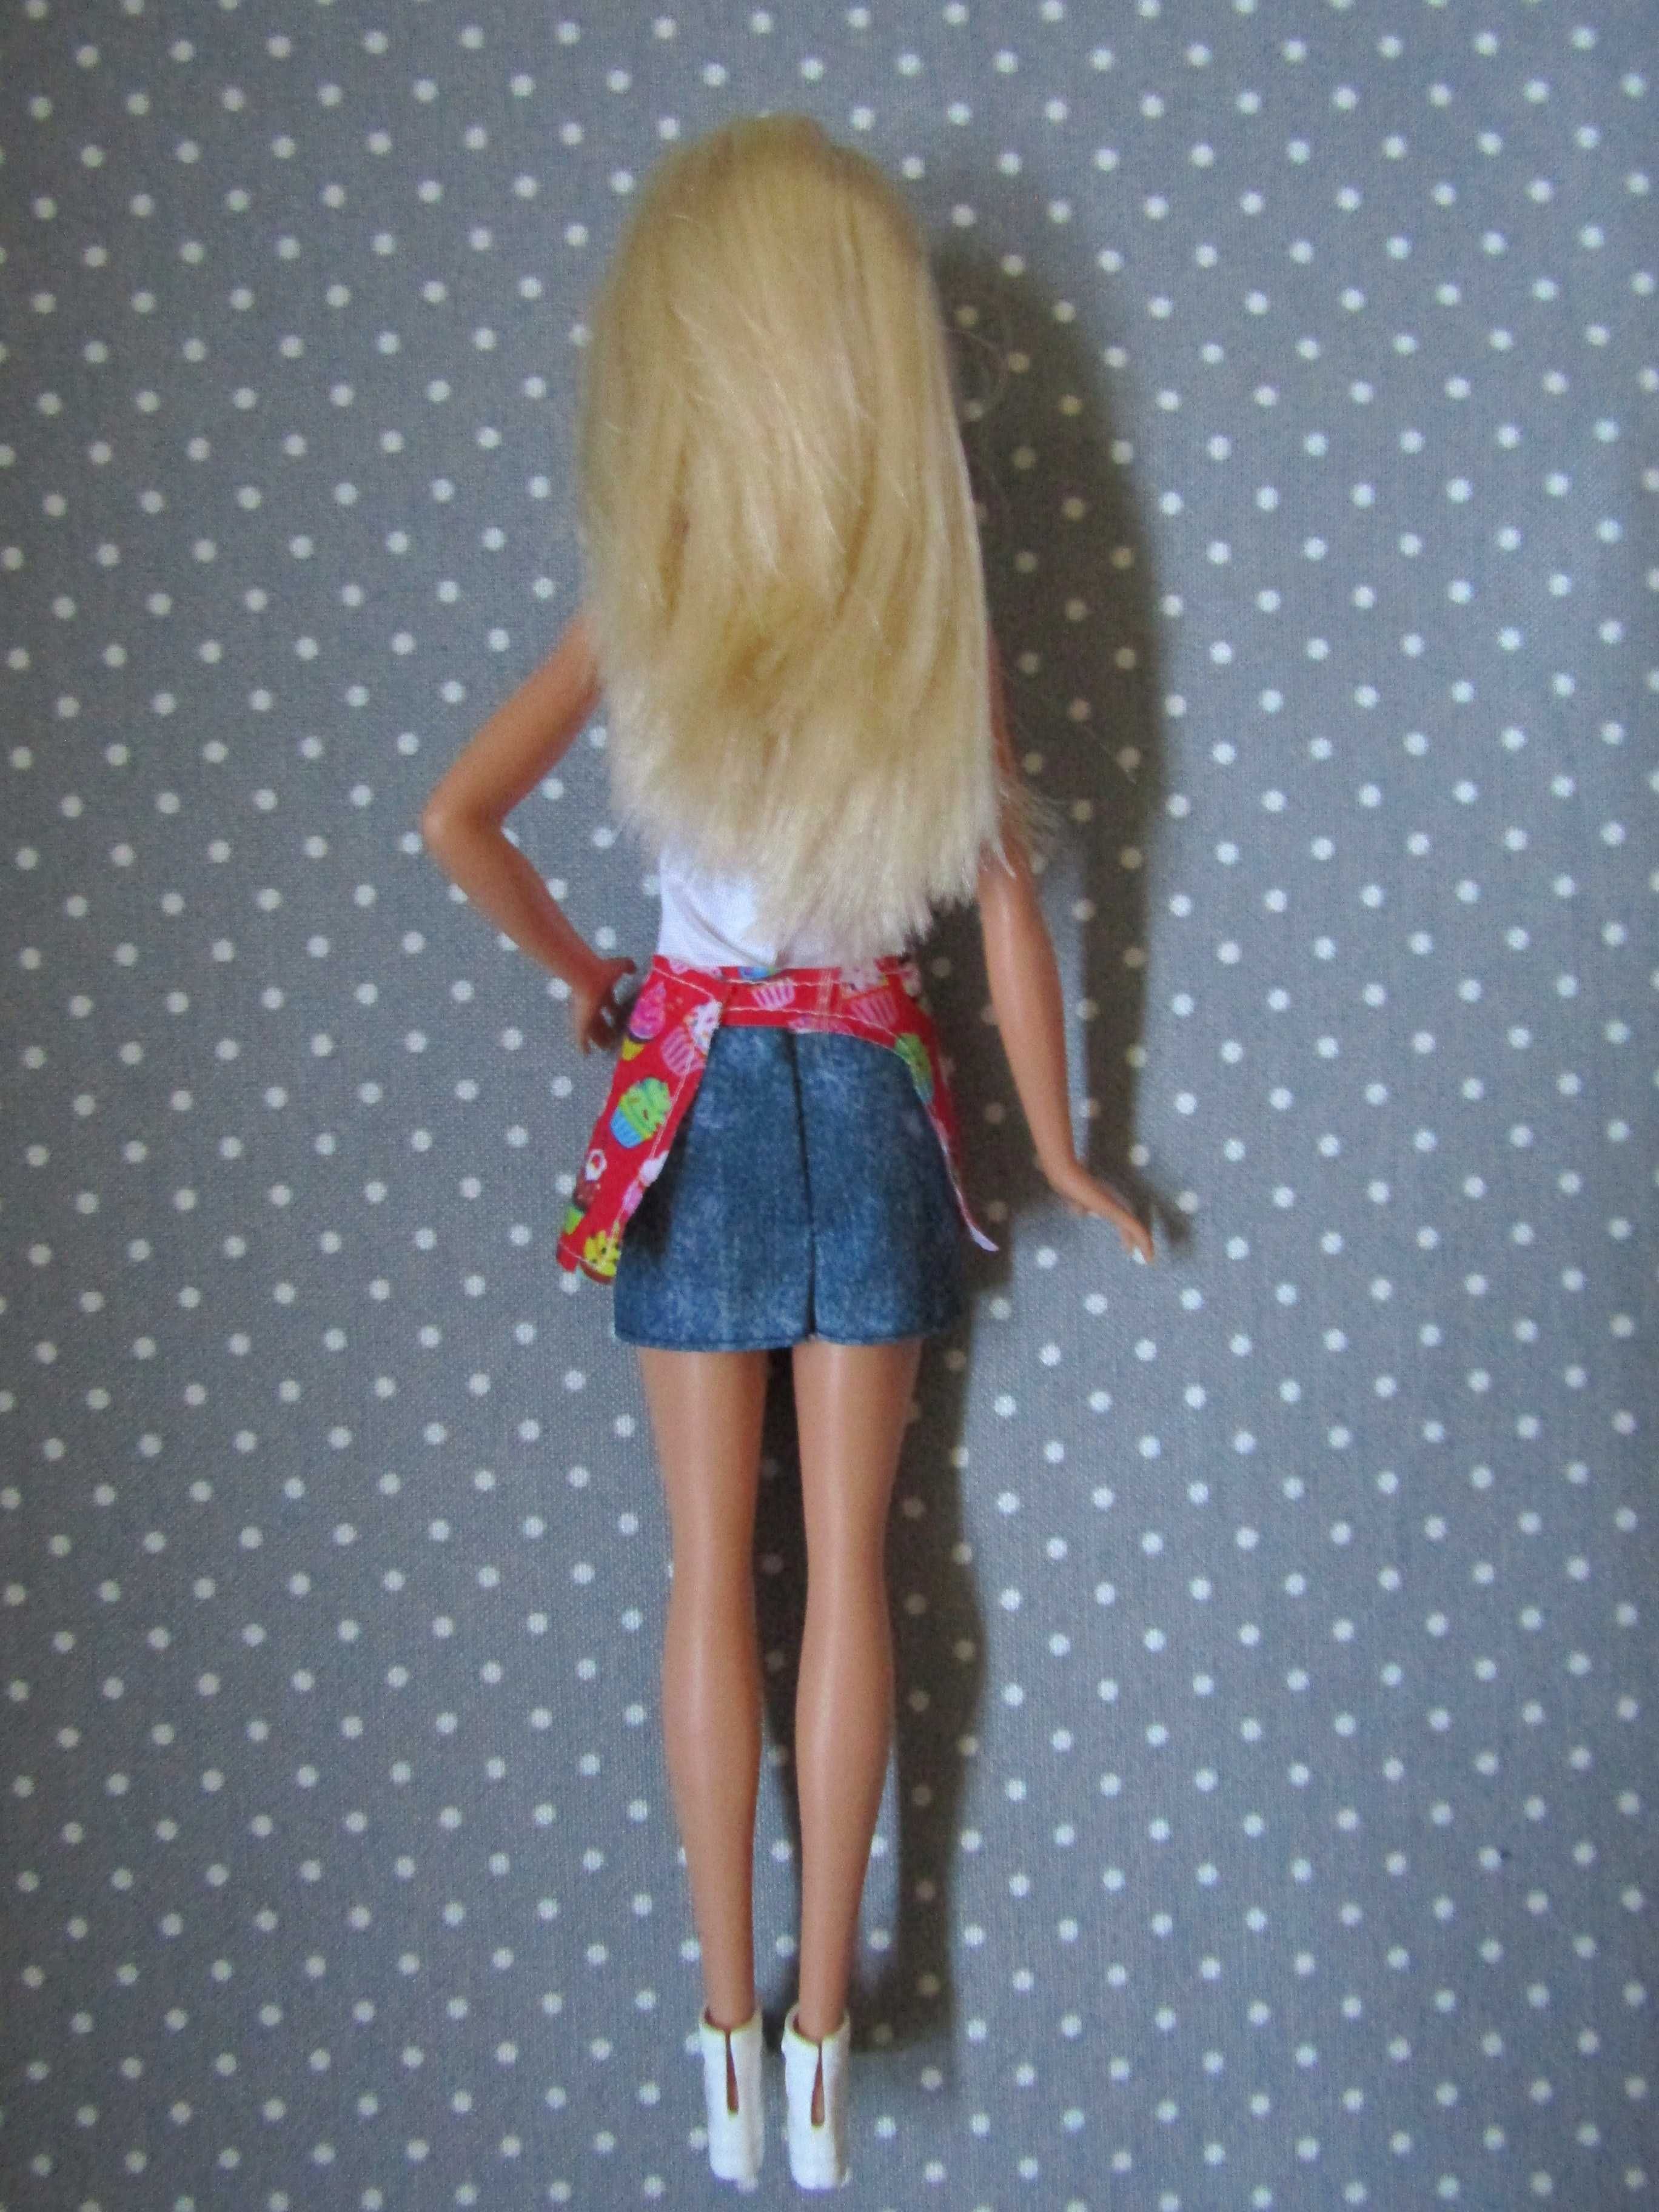 Barbie Pasteleira